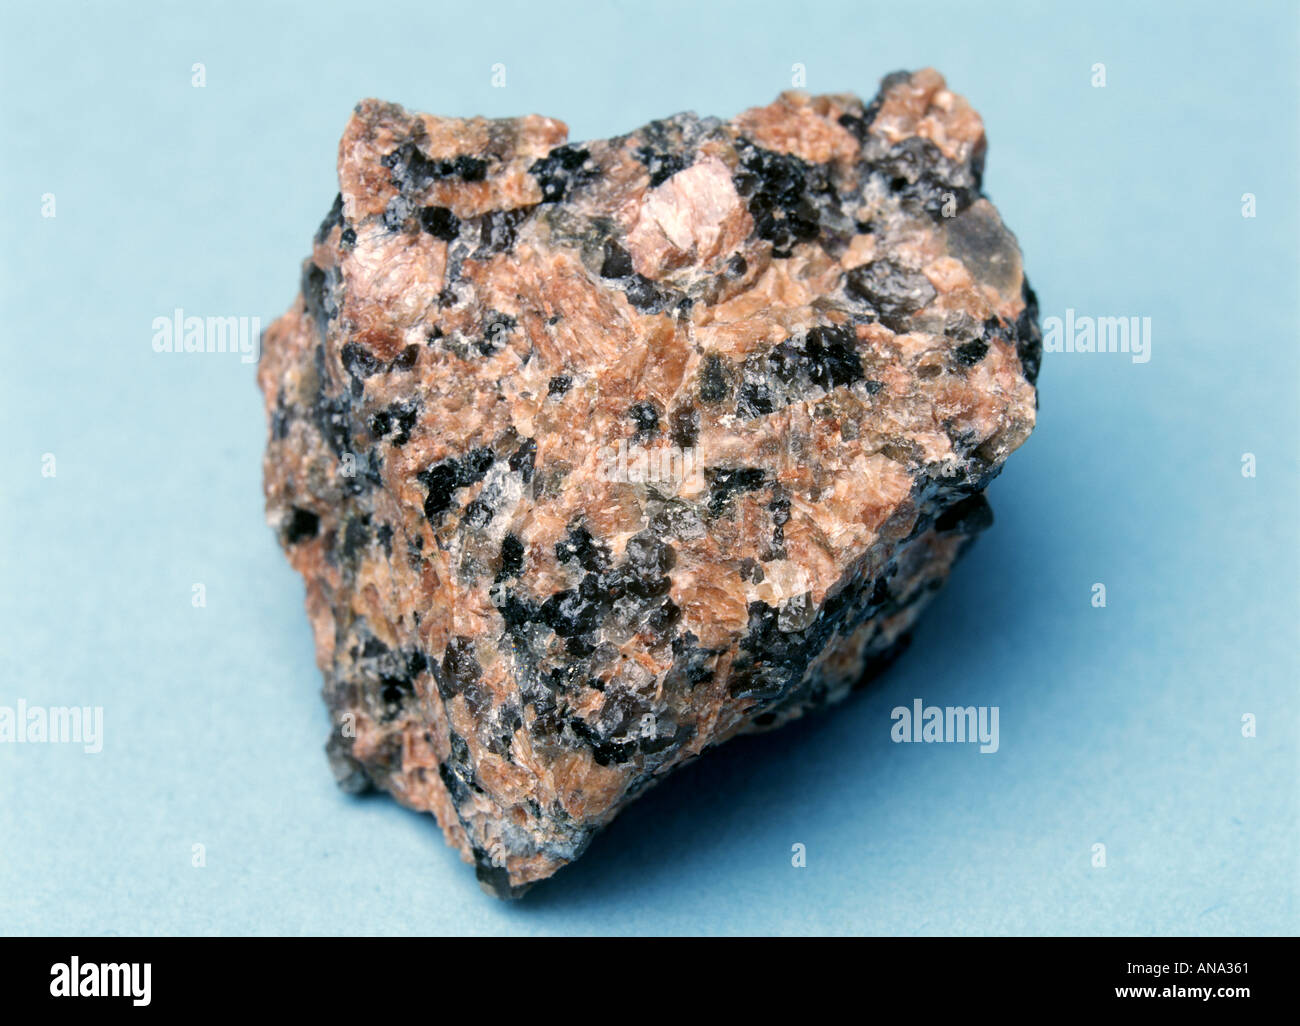 a specimen of pink granite on blue background Stock Photo